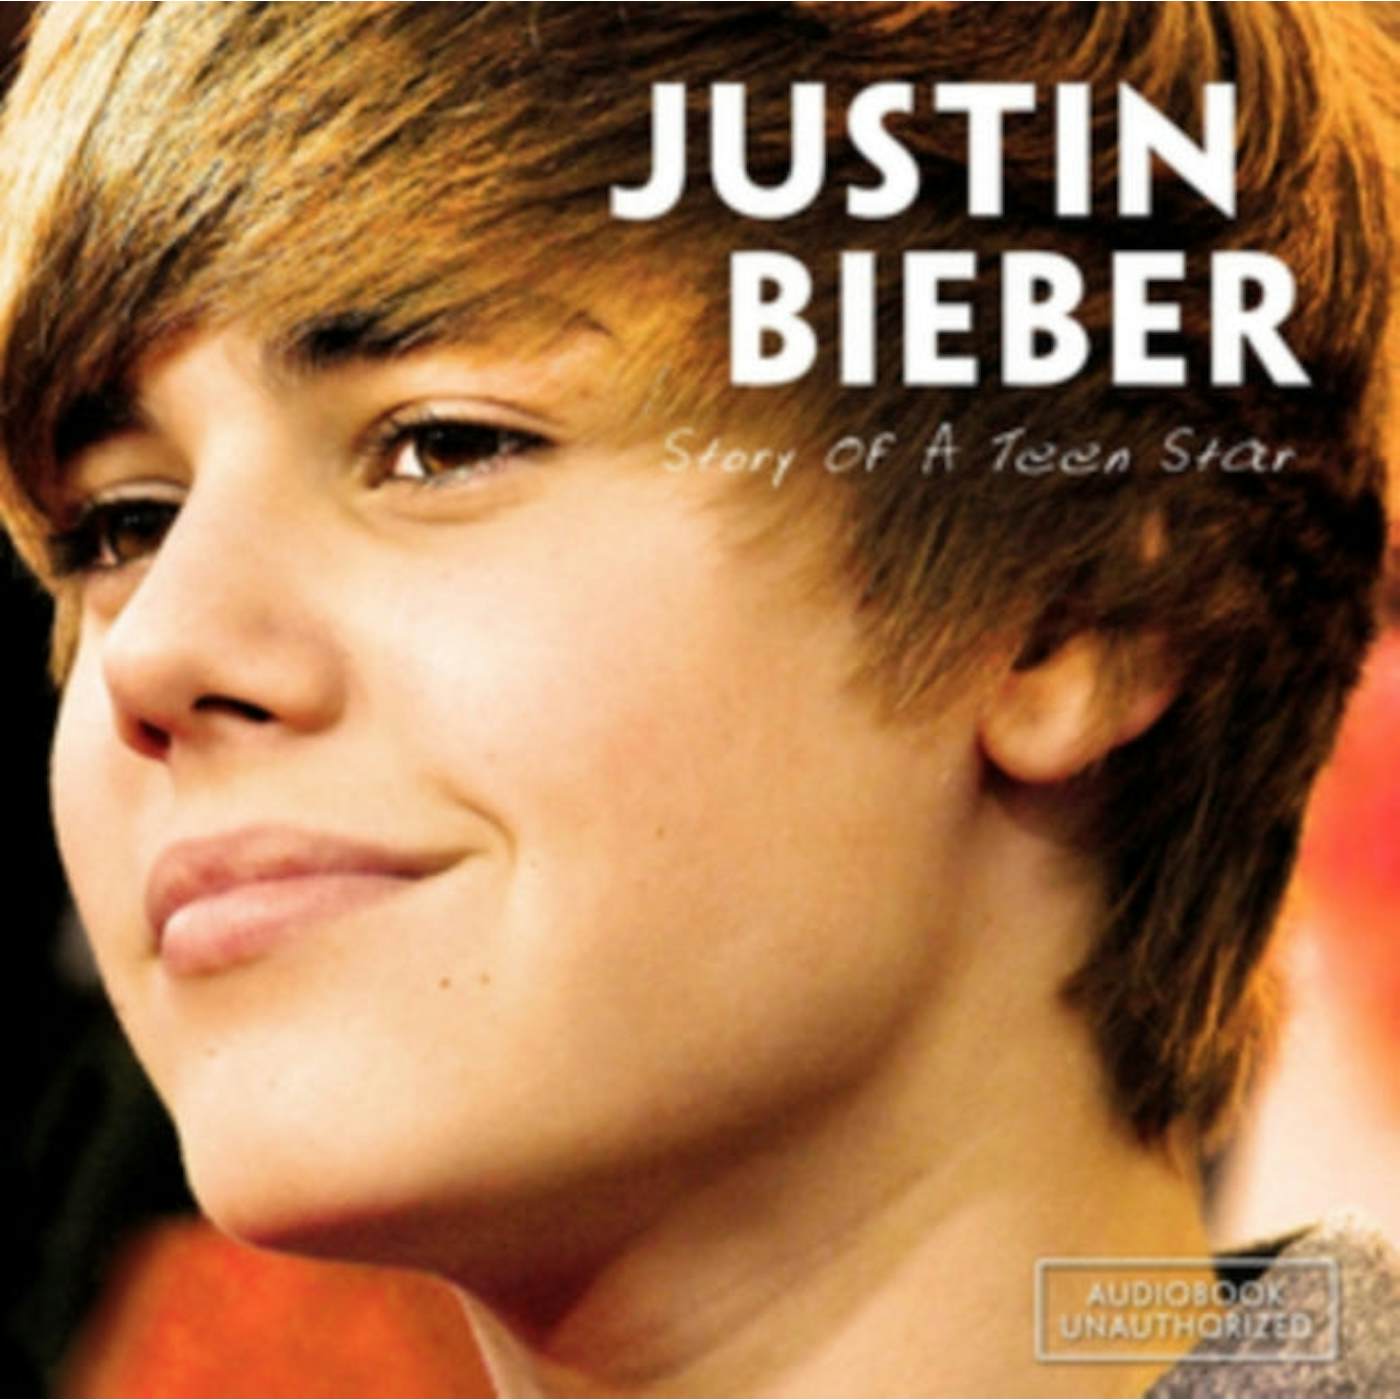 Justin Bieber CD - Story Of A Teen Star